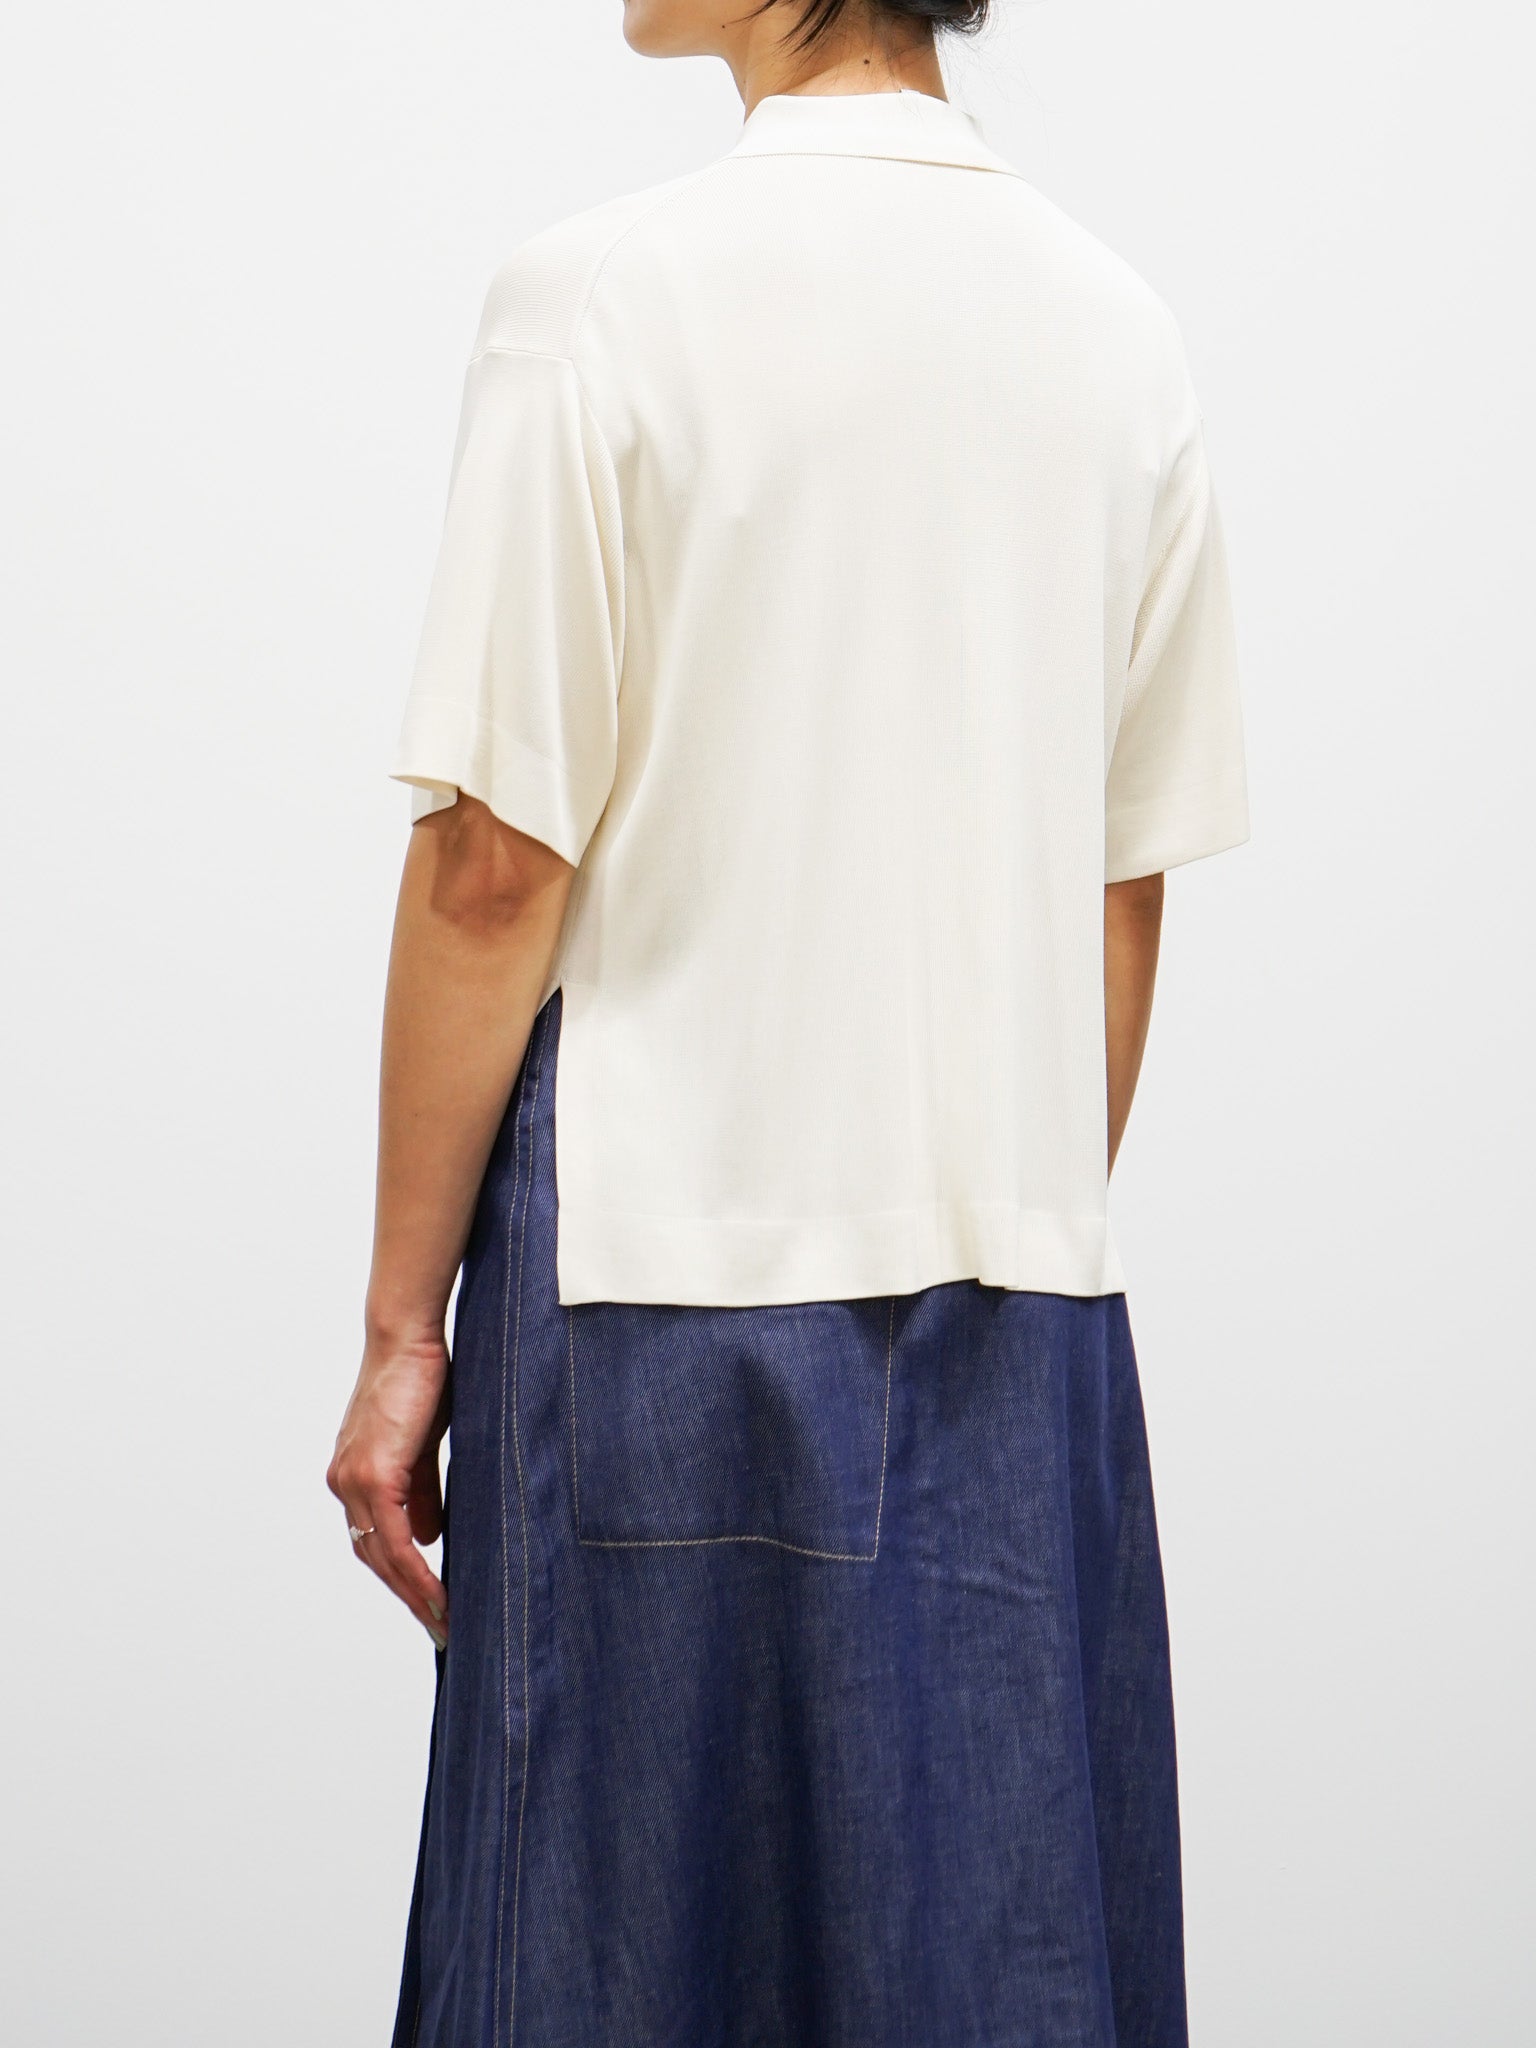 Namu Shop - Studio Nicholson Cedrus Jersey Short Sleeve Shirt - Parchment